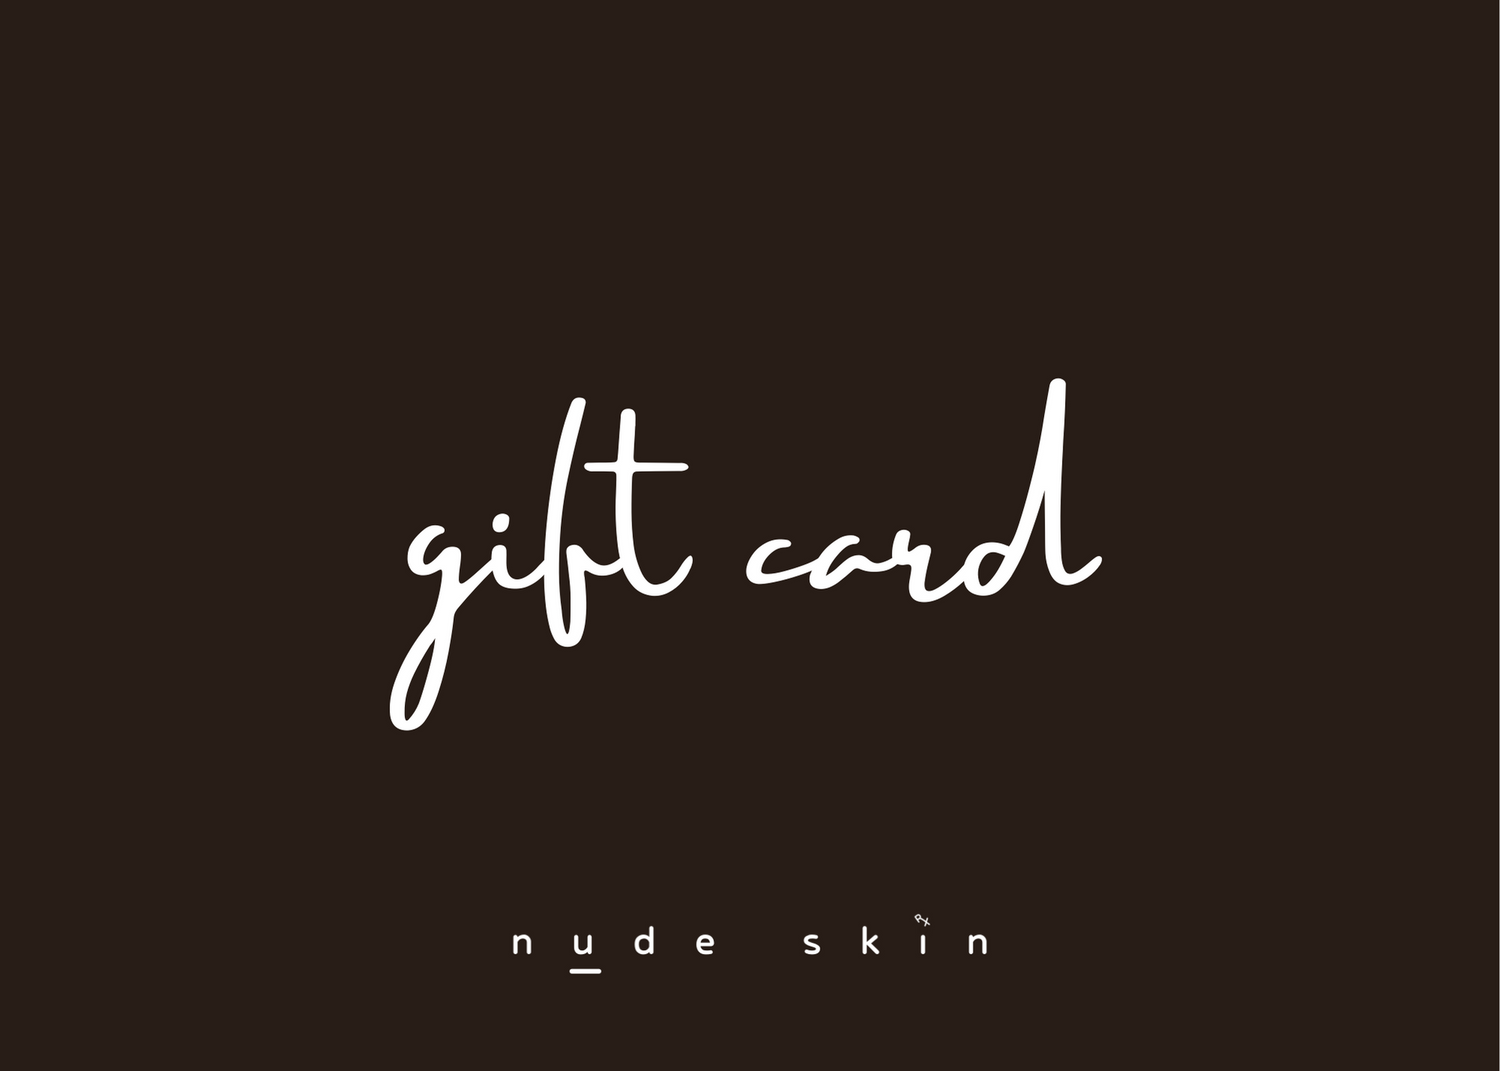 Nude Skin RX Gift Card - Nude Skin RX